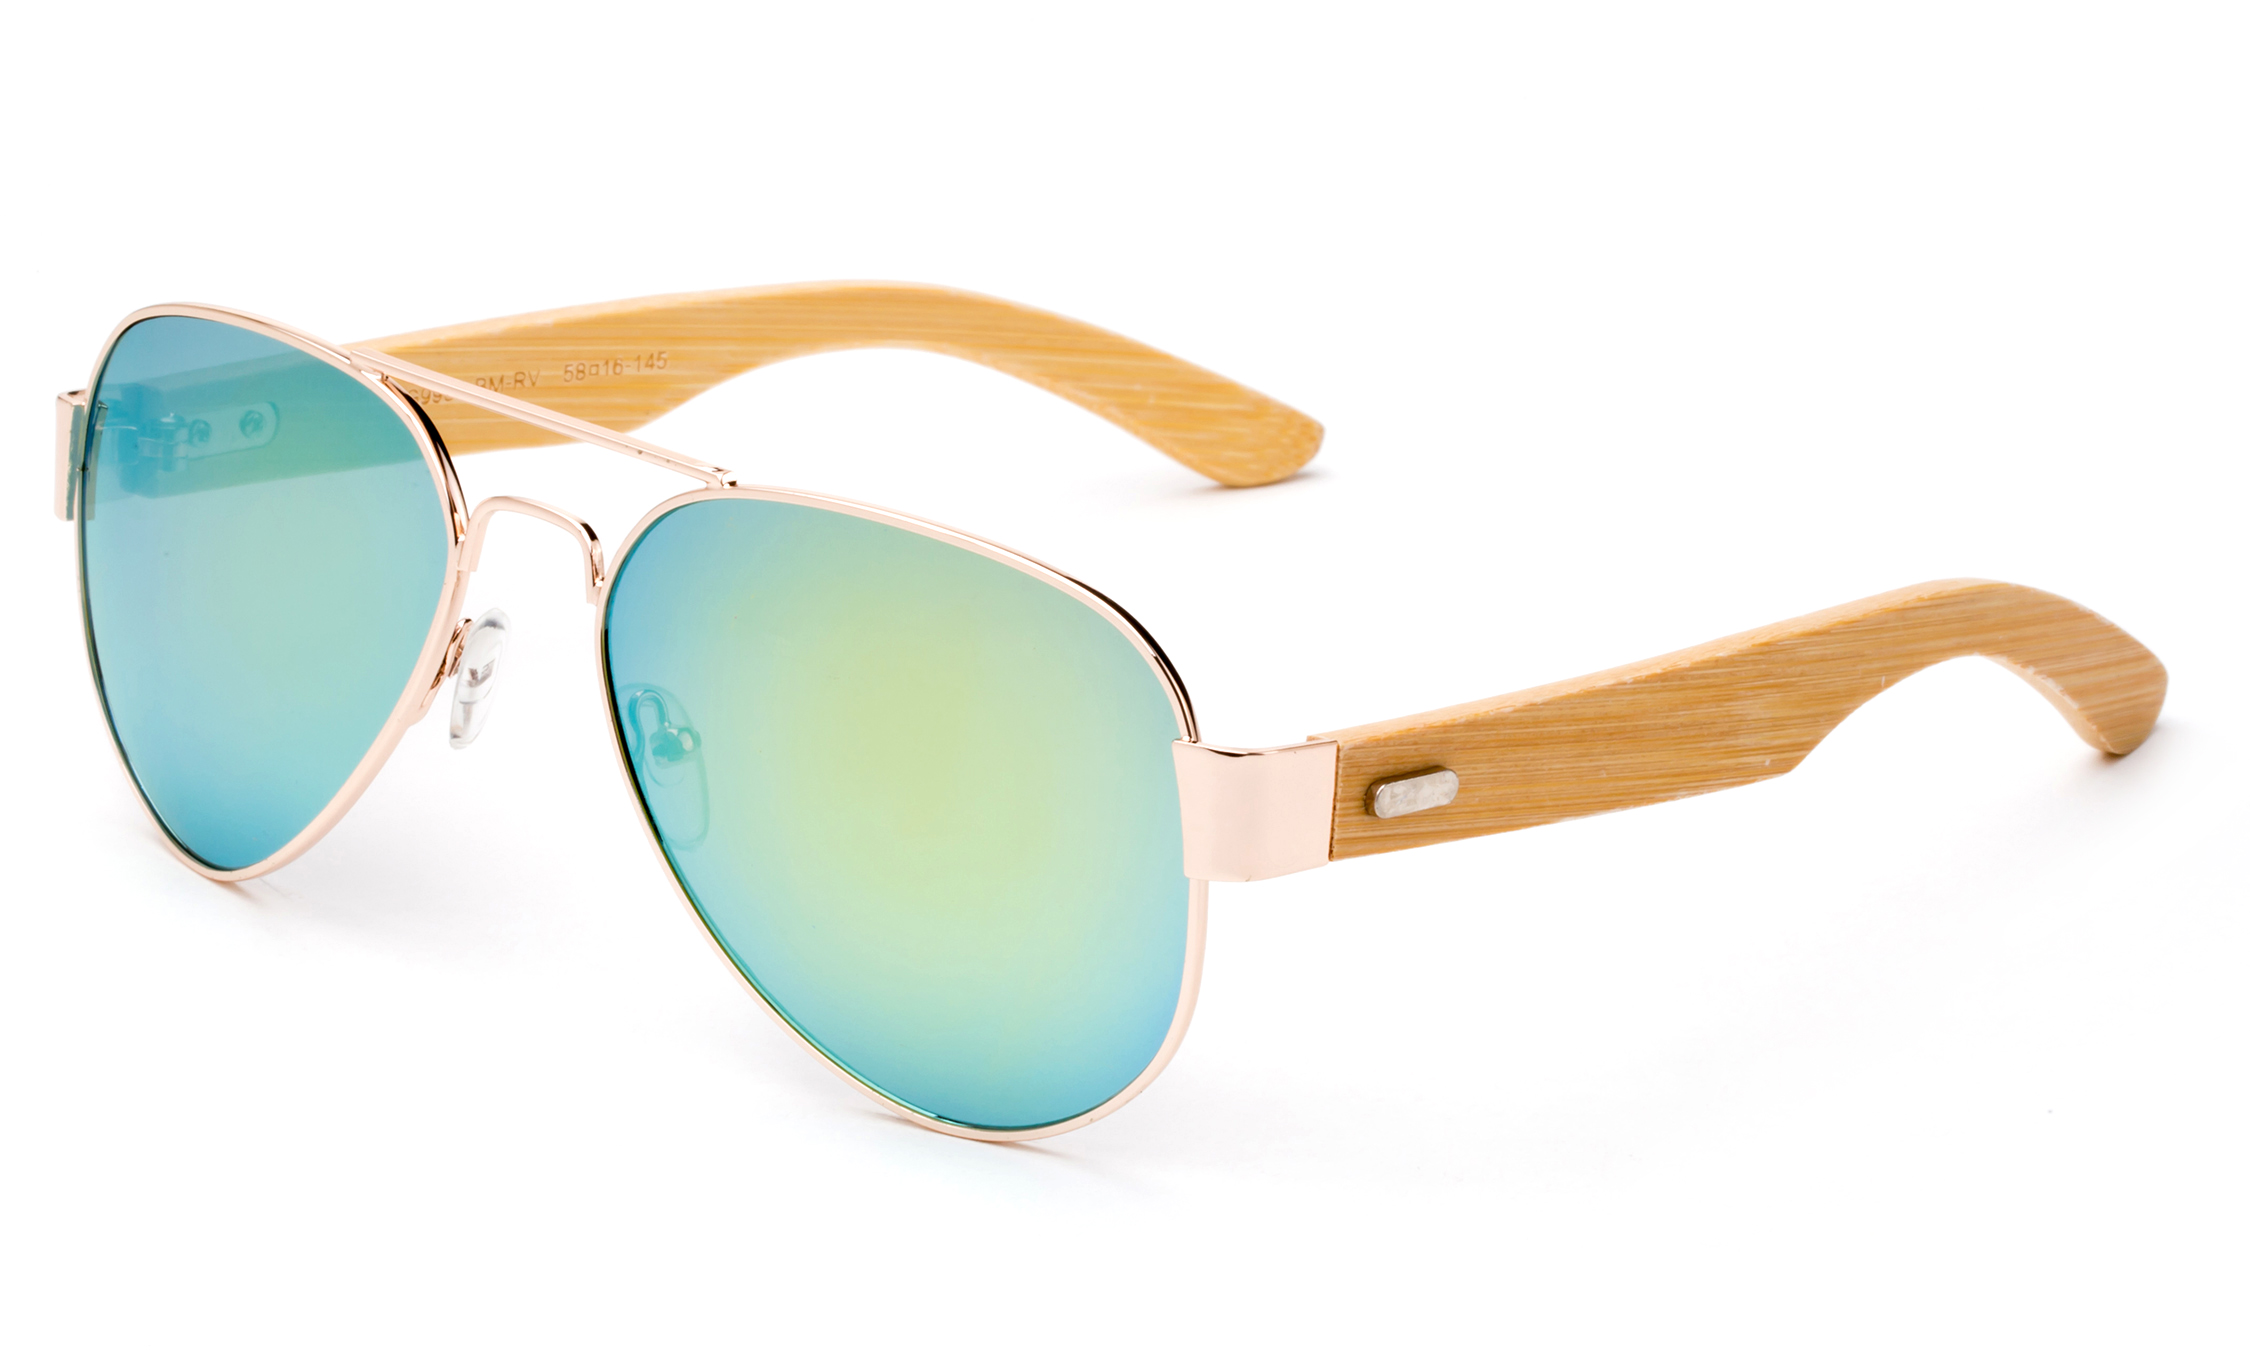 High Qaulity Real Bamboo Arm Aviator Sunglasses Bamboo Sunglasses for Men & Women - image 3 of 3